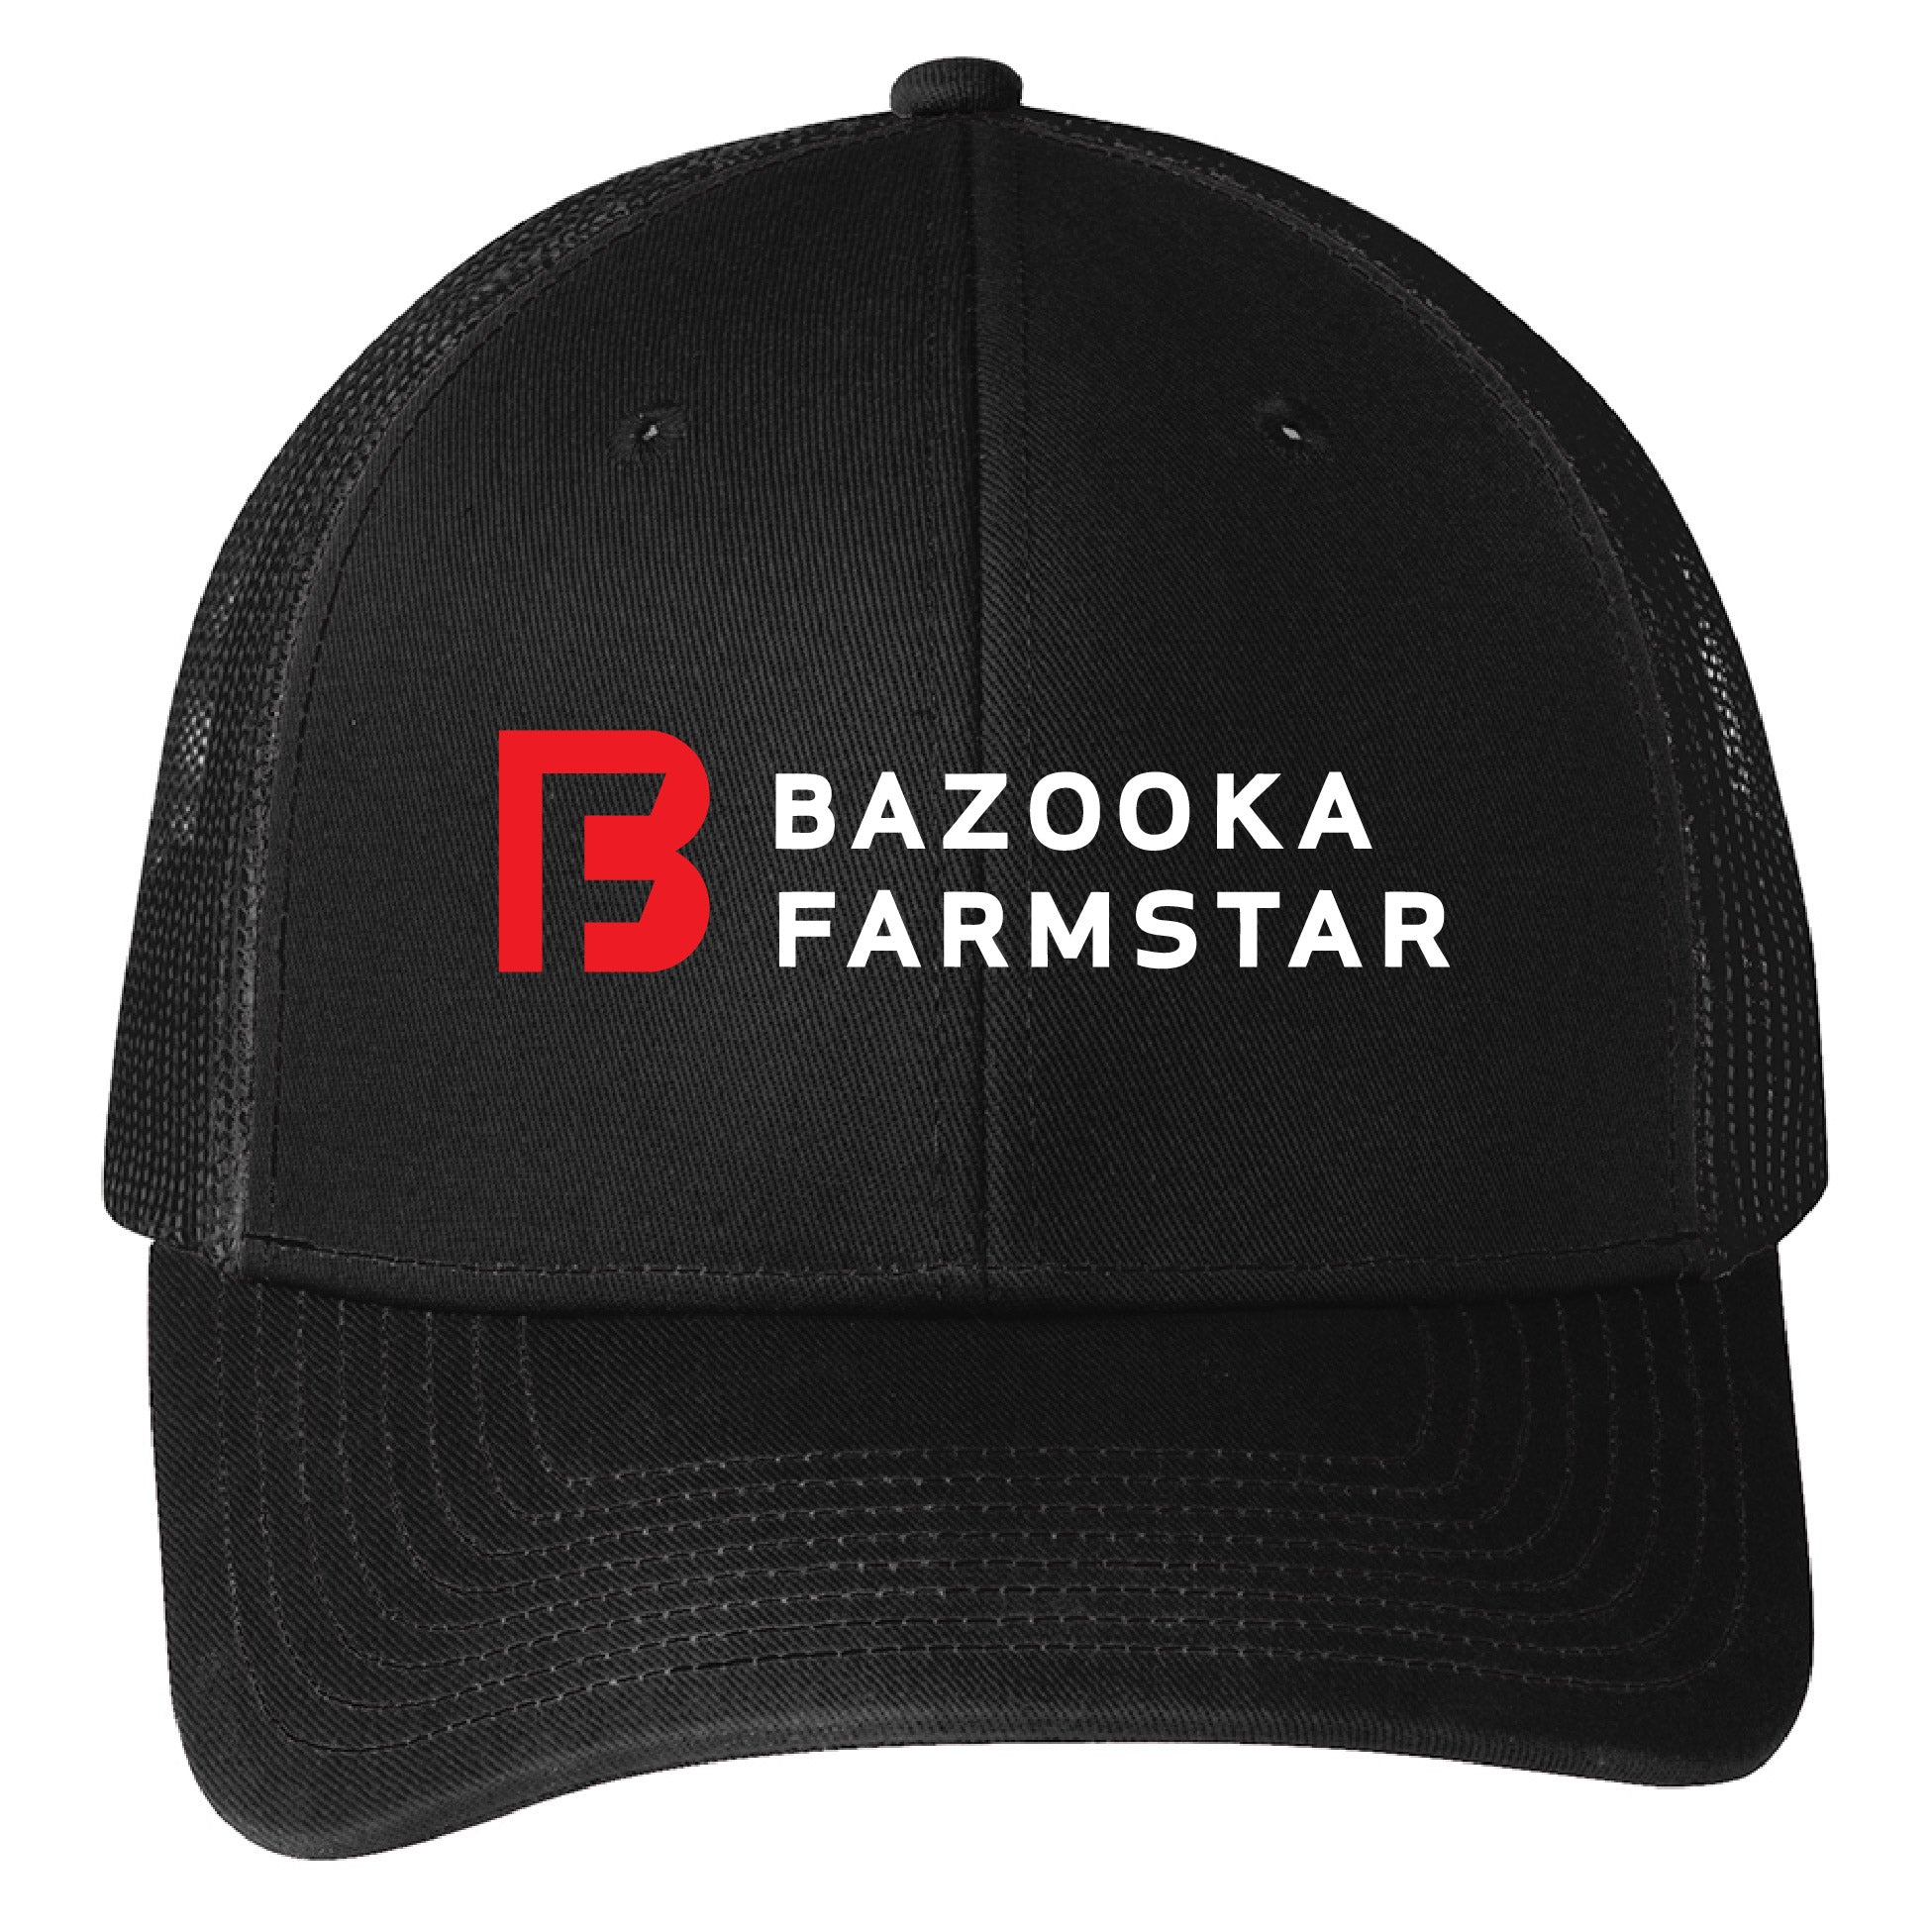 Bazooka Farmstar Snapback Trucker Cap